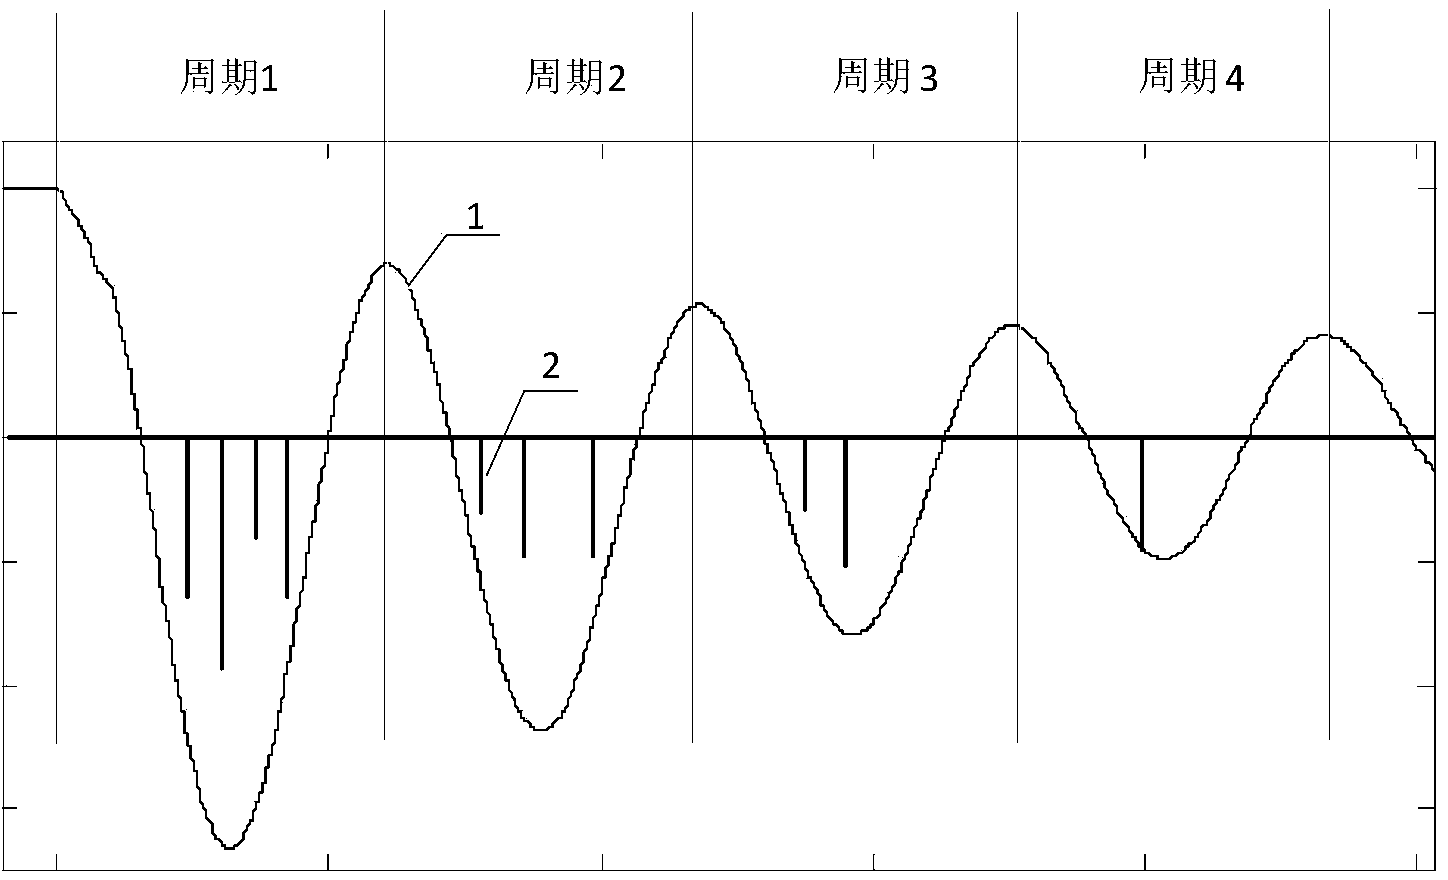 GIS partial discharge mode identification method under oscillation mode impulse voltage